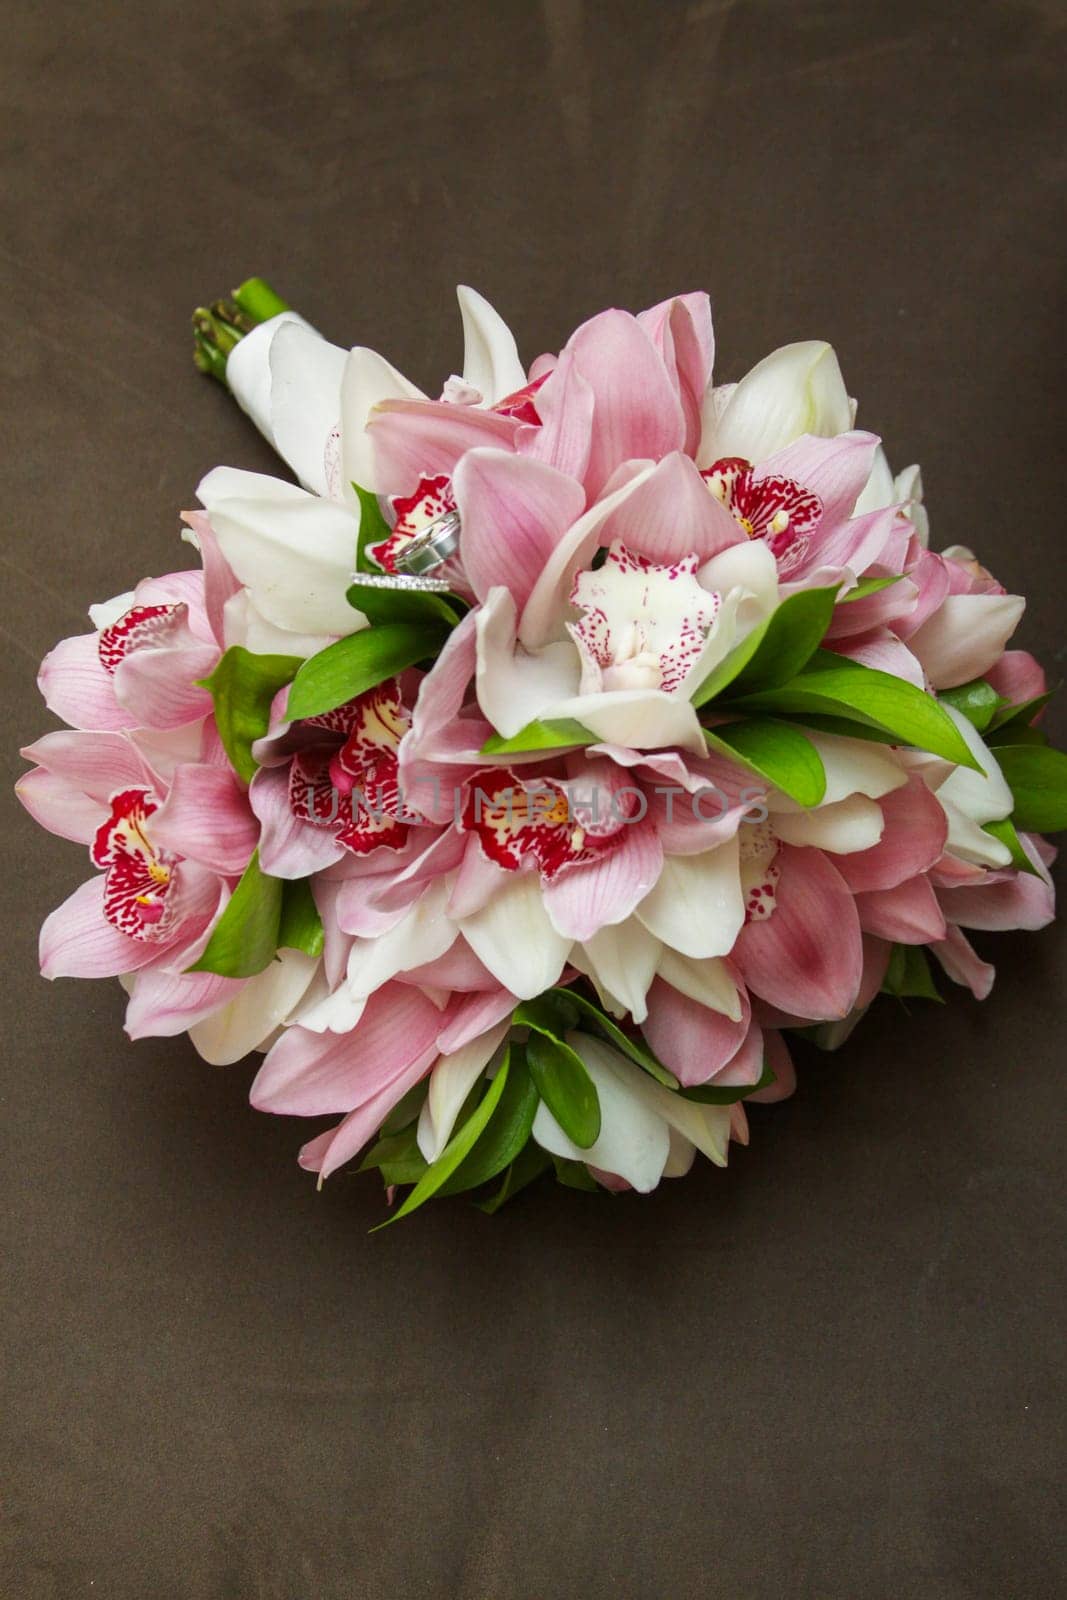 Pastel Bridal Colors of an Orchid Bouquet